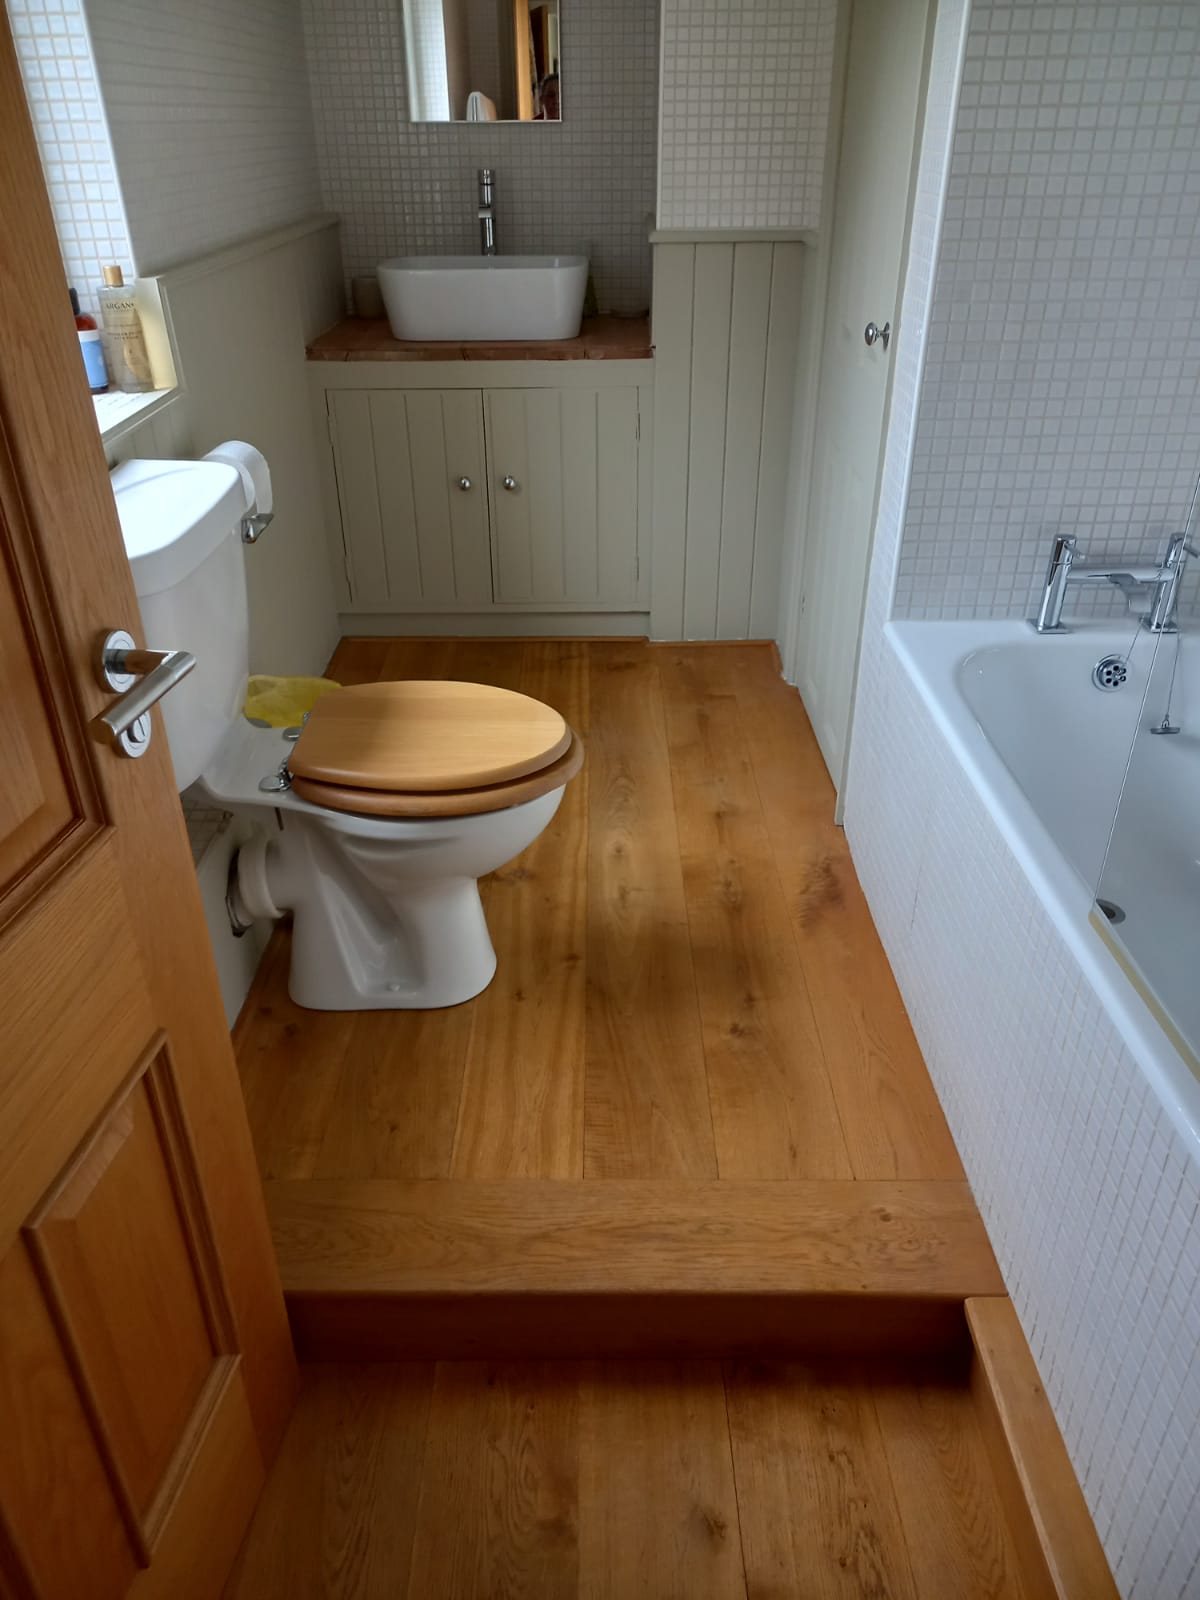 Spotless wooden bathroom